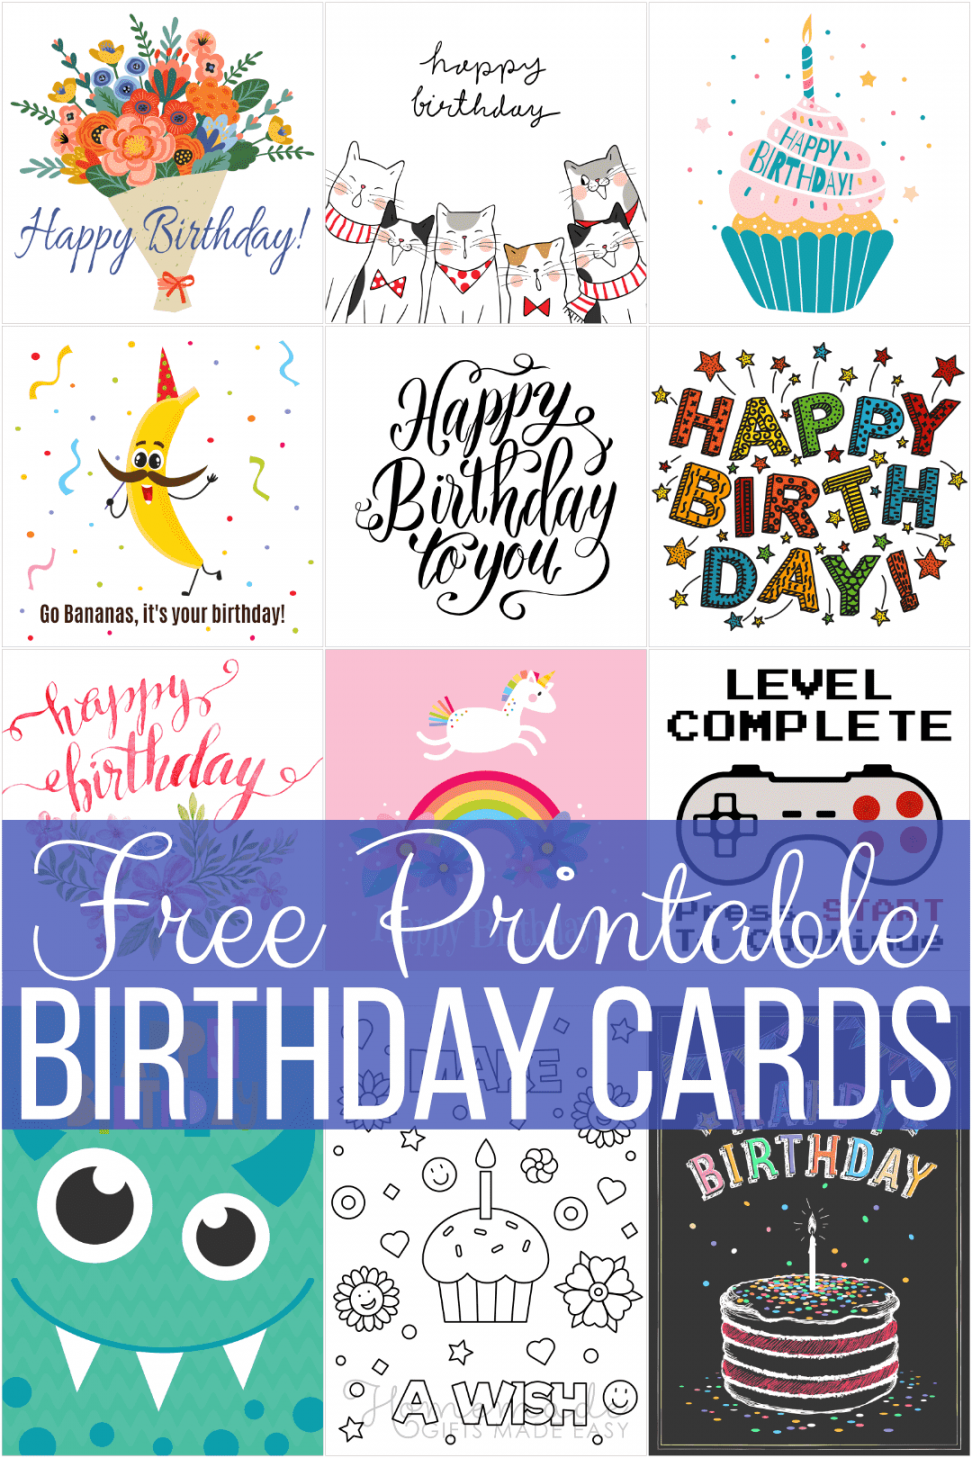 Free Printable Birthday Cards - Printable - Free Printable Birthday Cards for Everyone